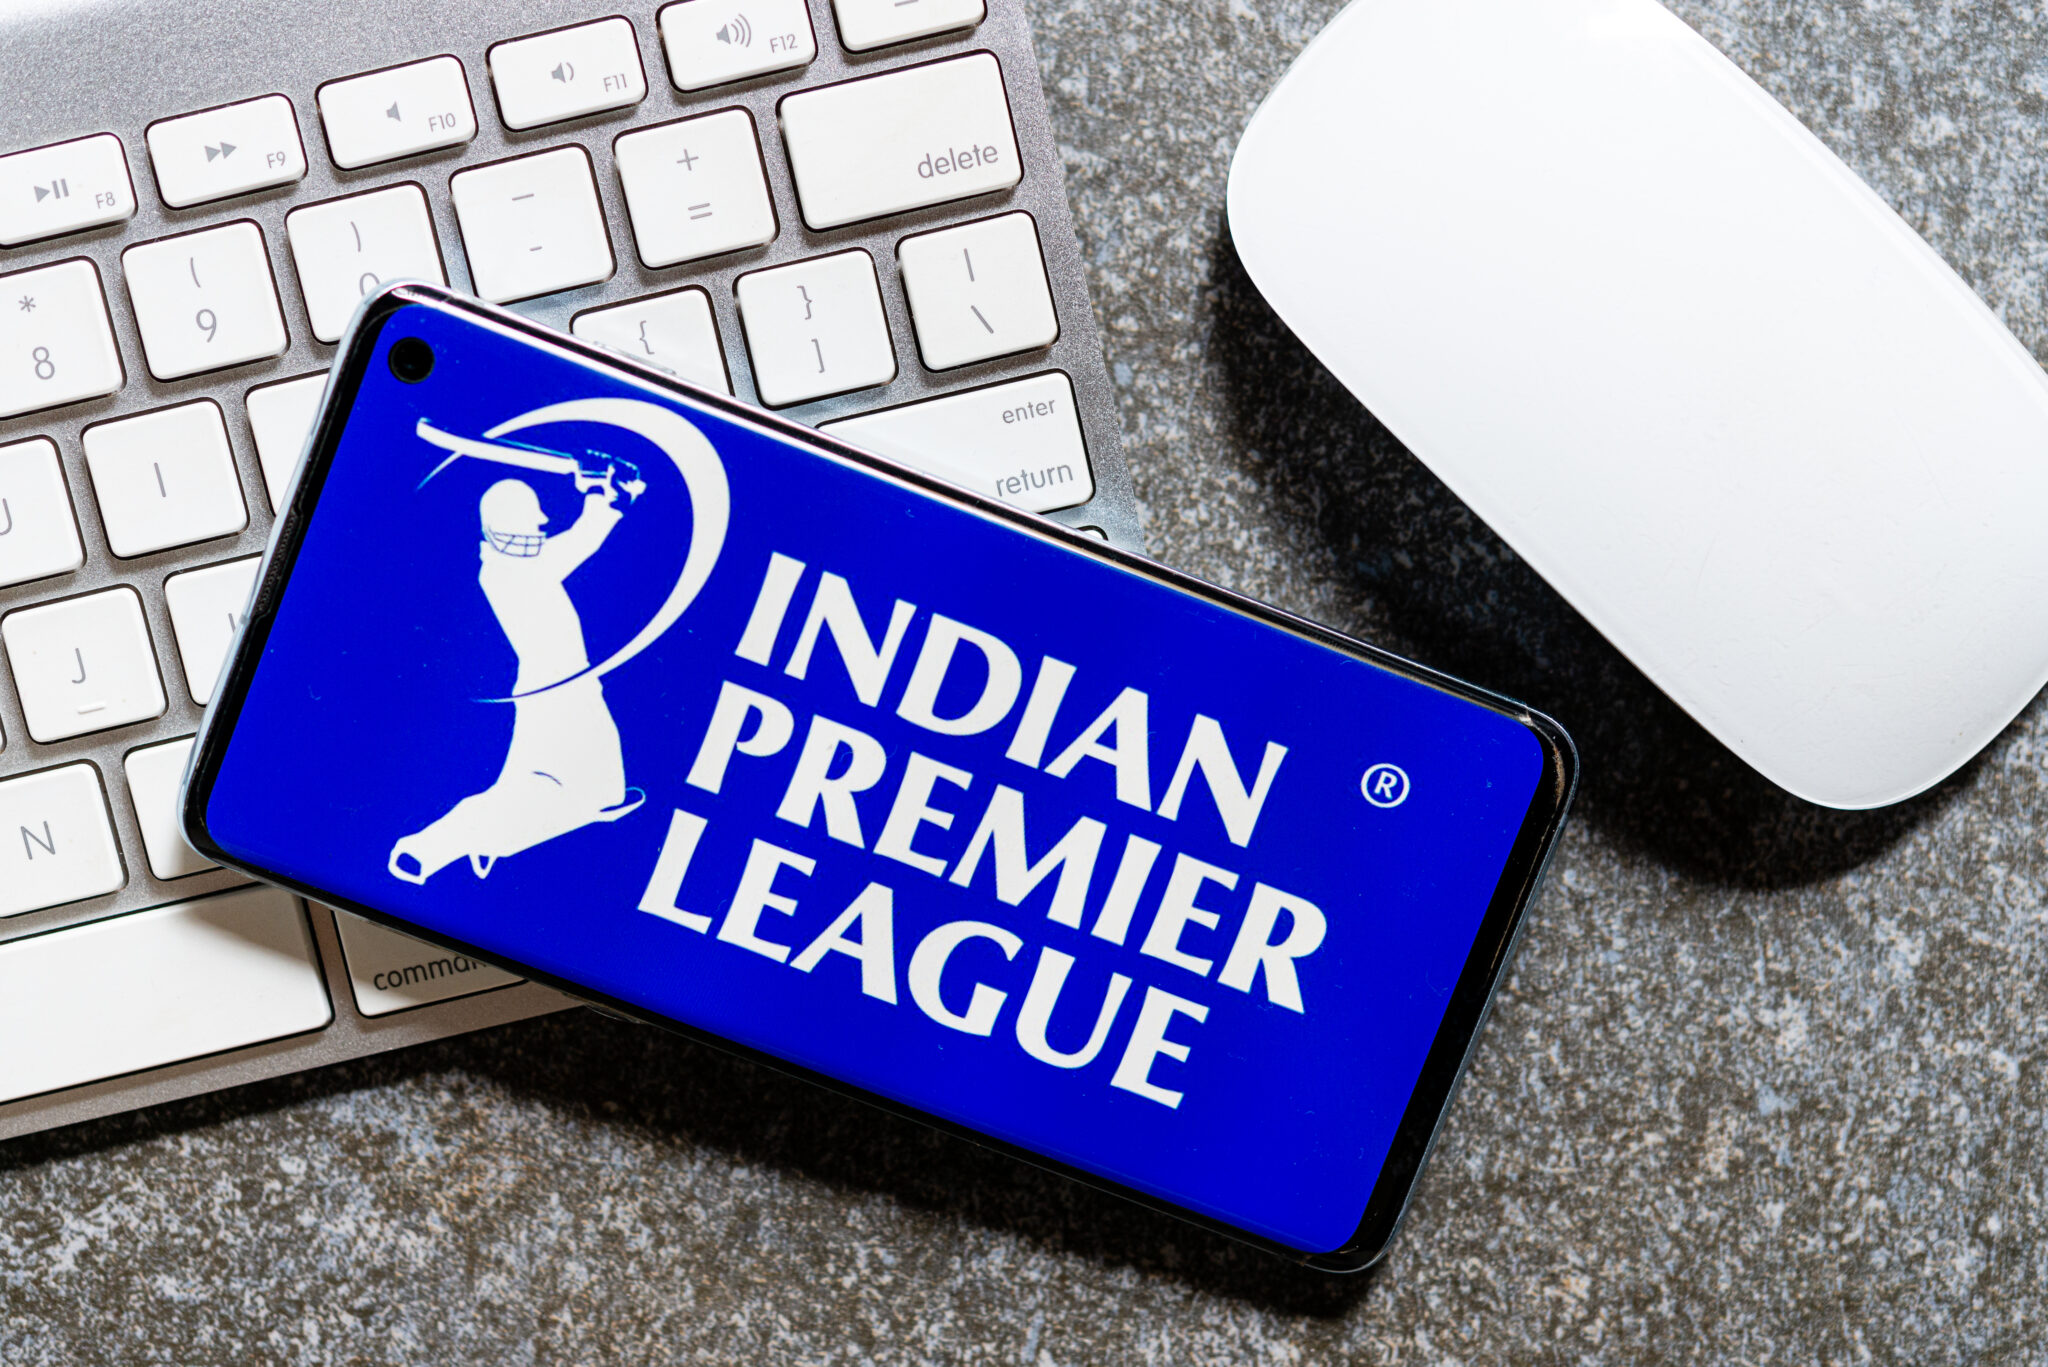 October 24, 2020, Brazil. Indian Premier League is the main cricket league.